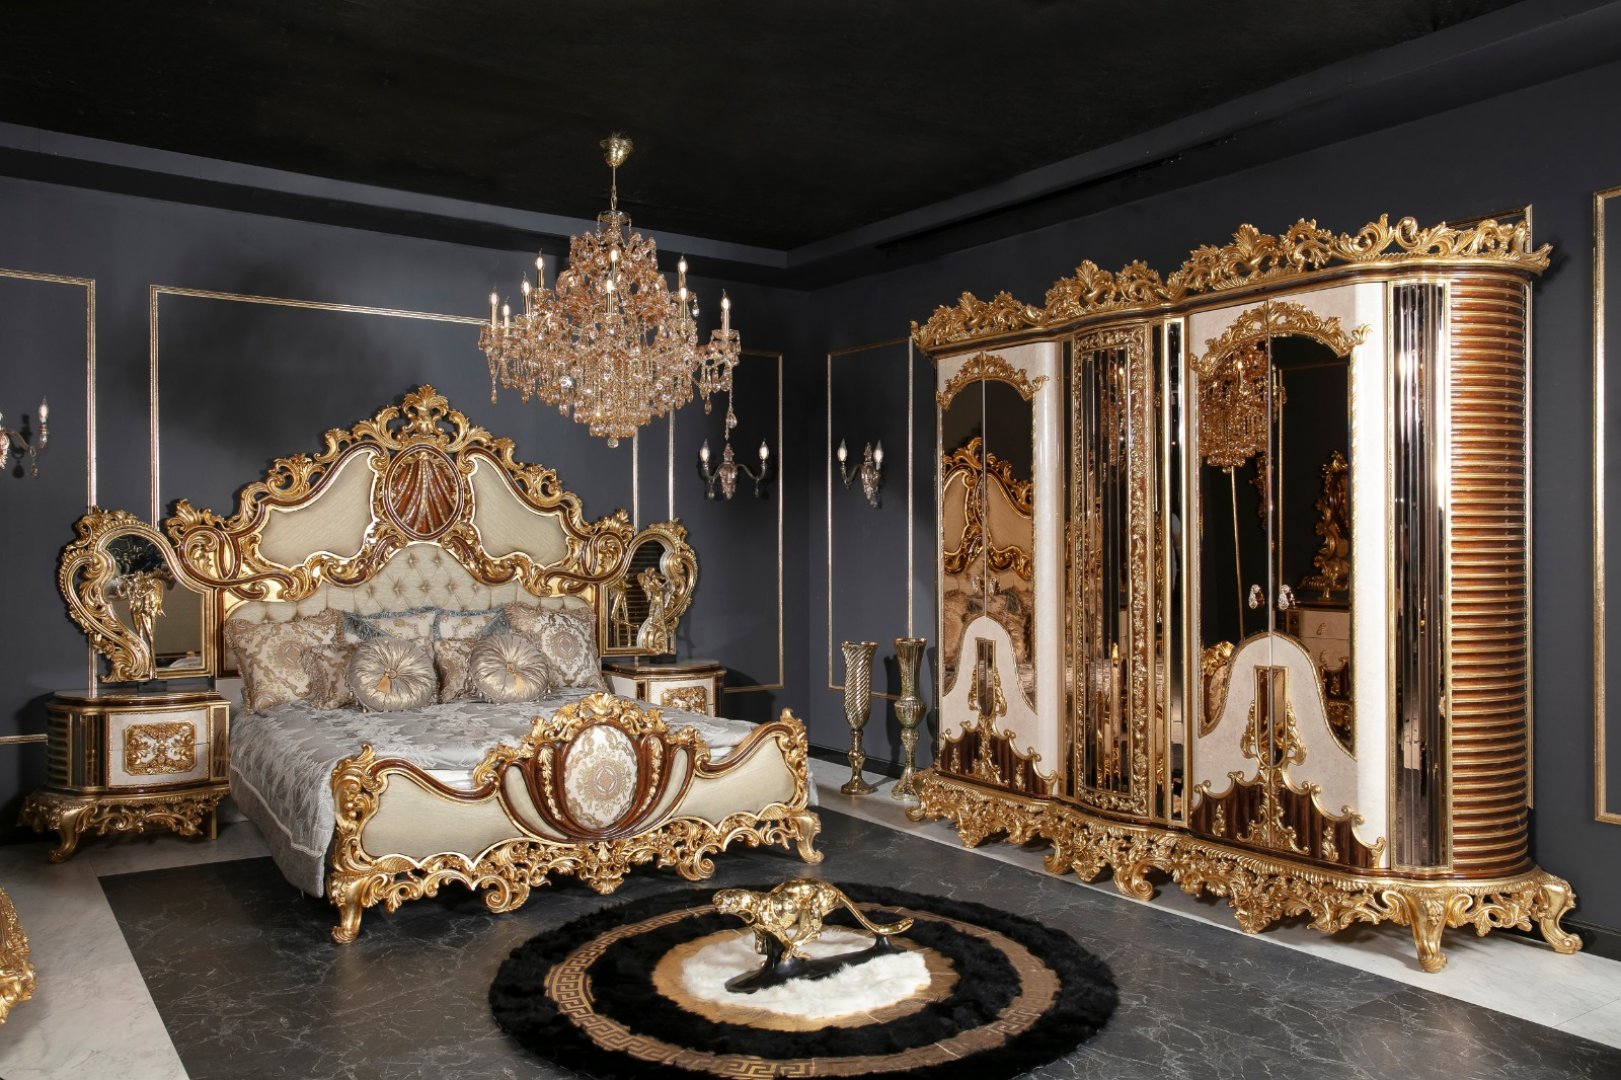 Emperor Classic Bedroom Set